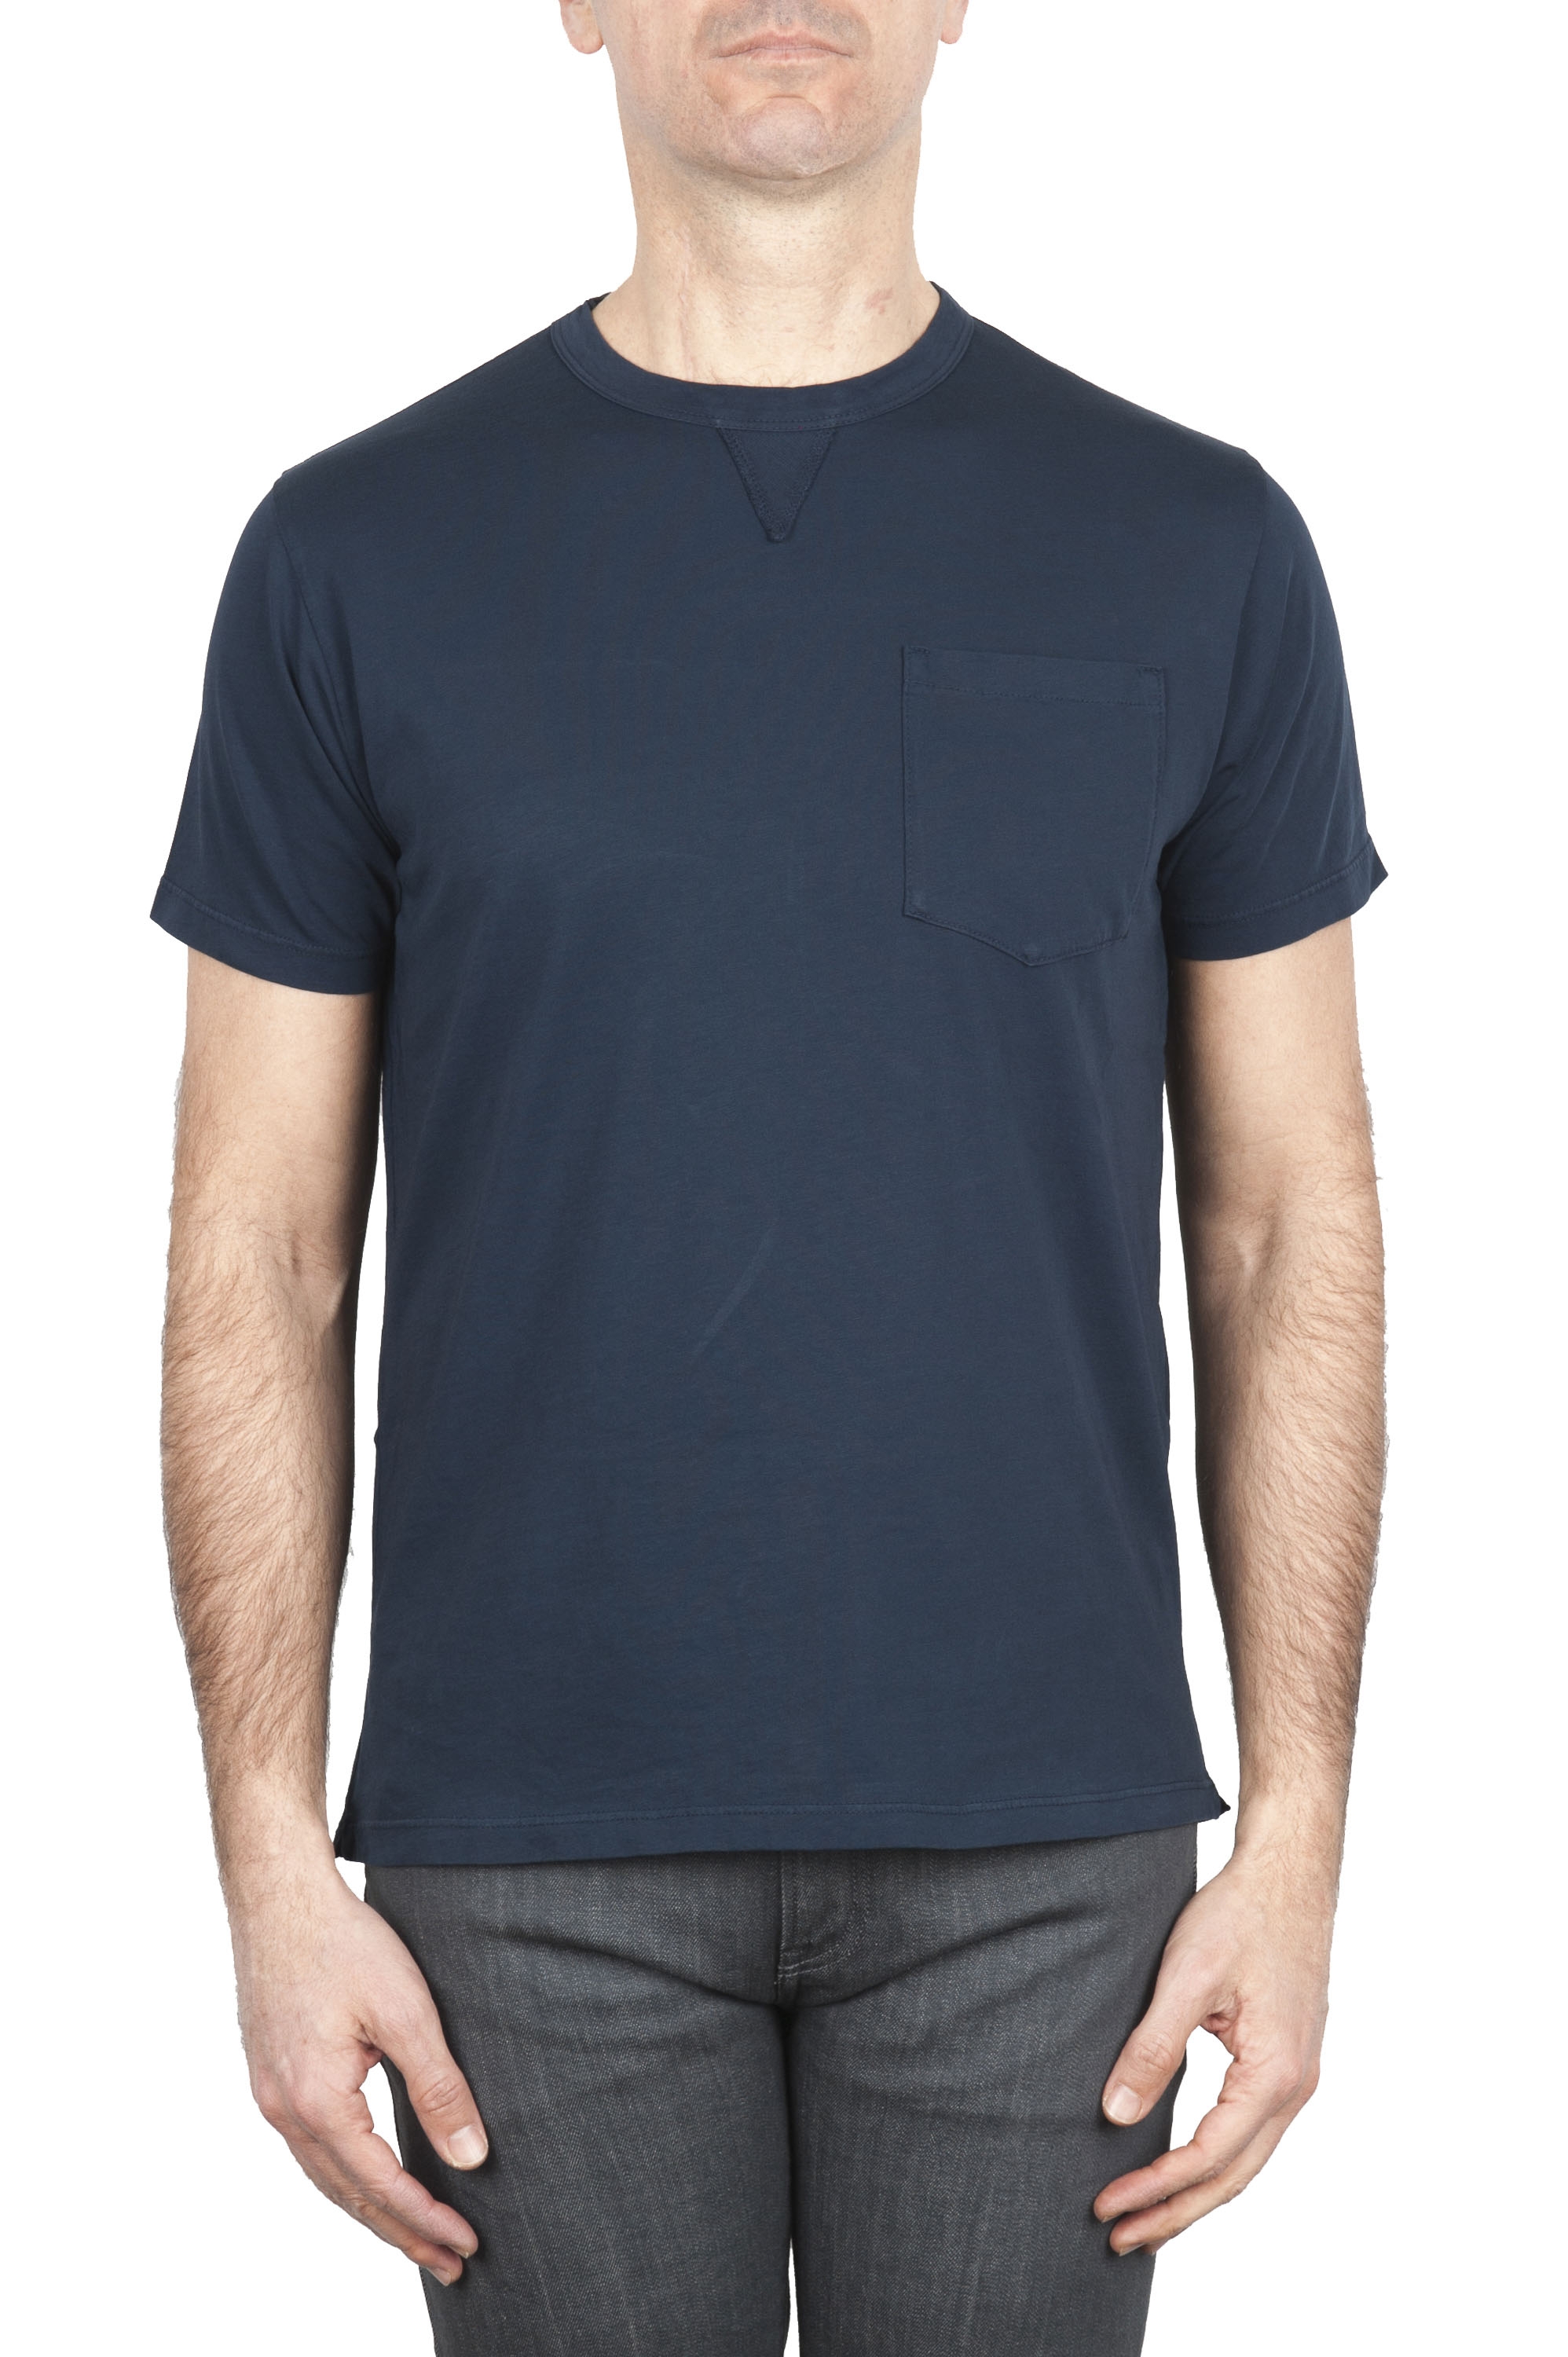 SBU 01656 Tee-shirt en coton à col rond et poche plaquée bleu marin 01